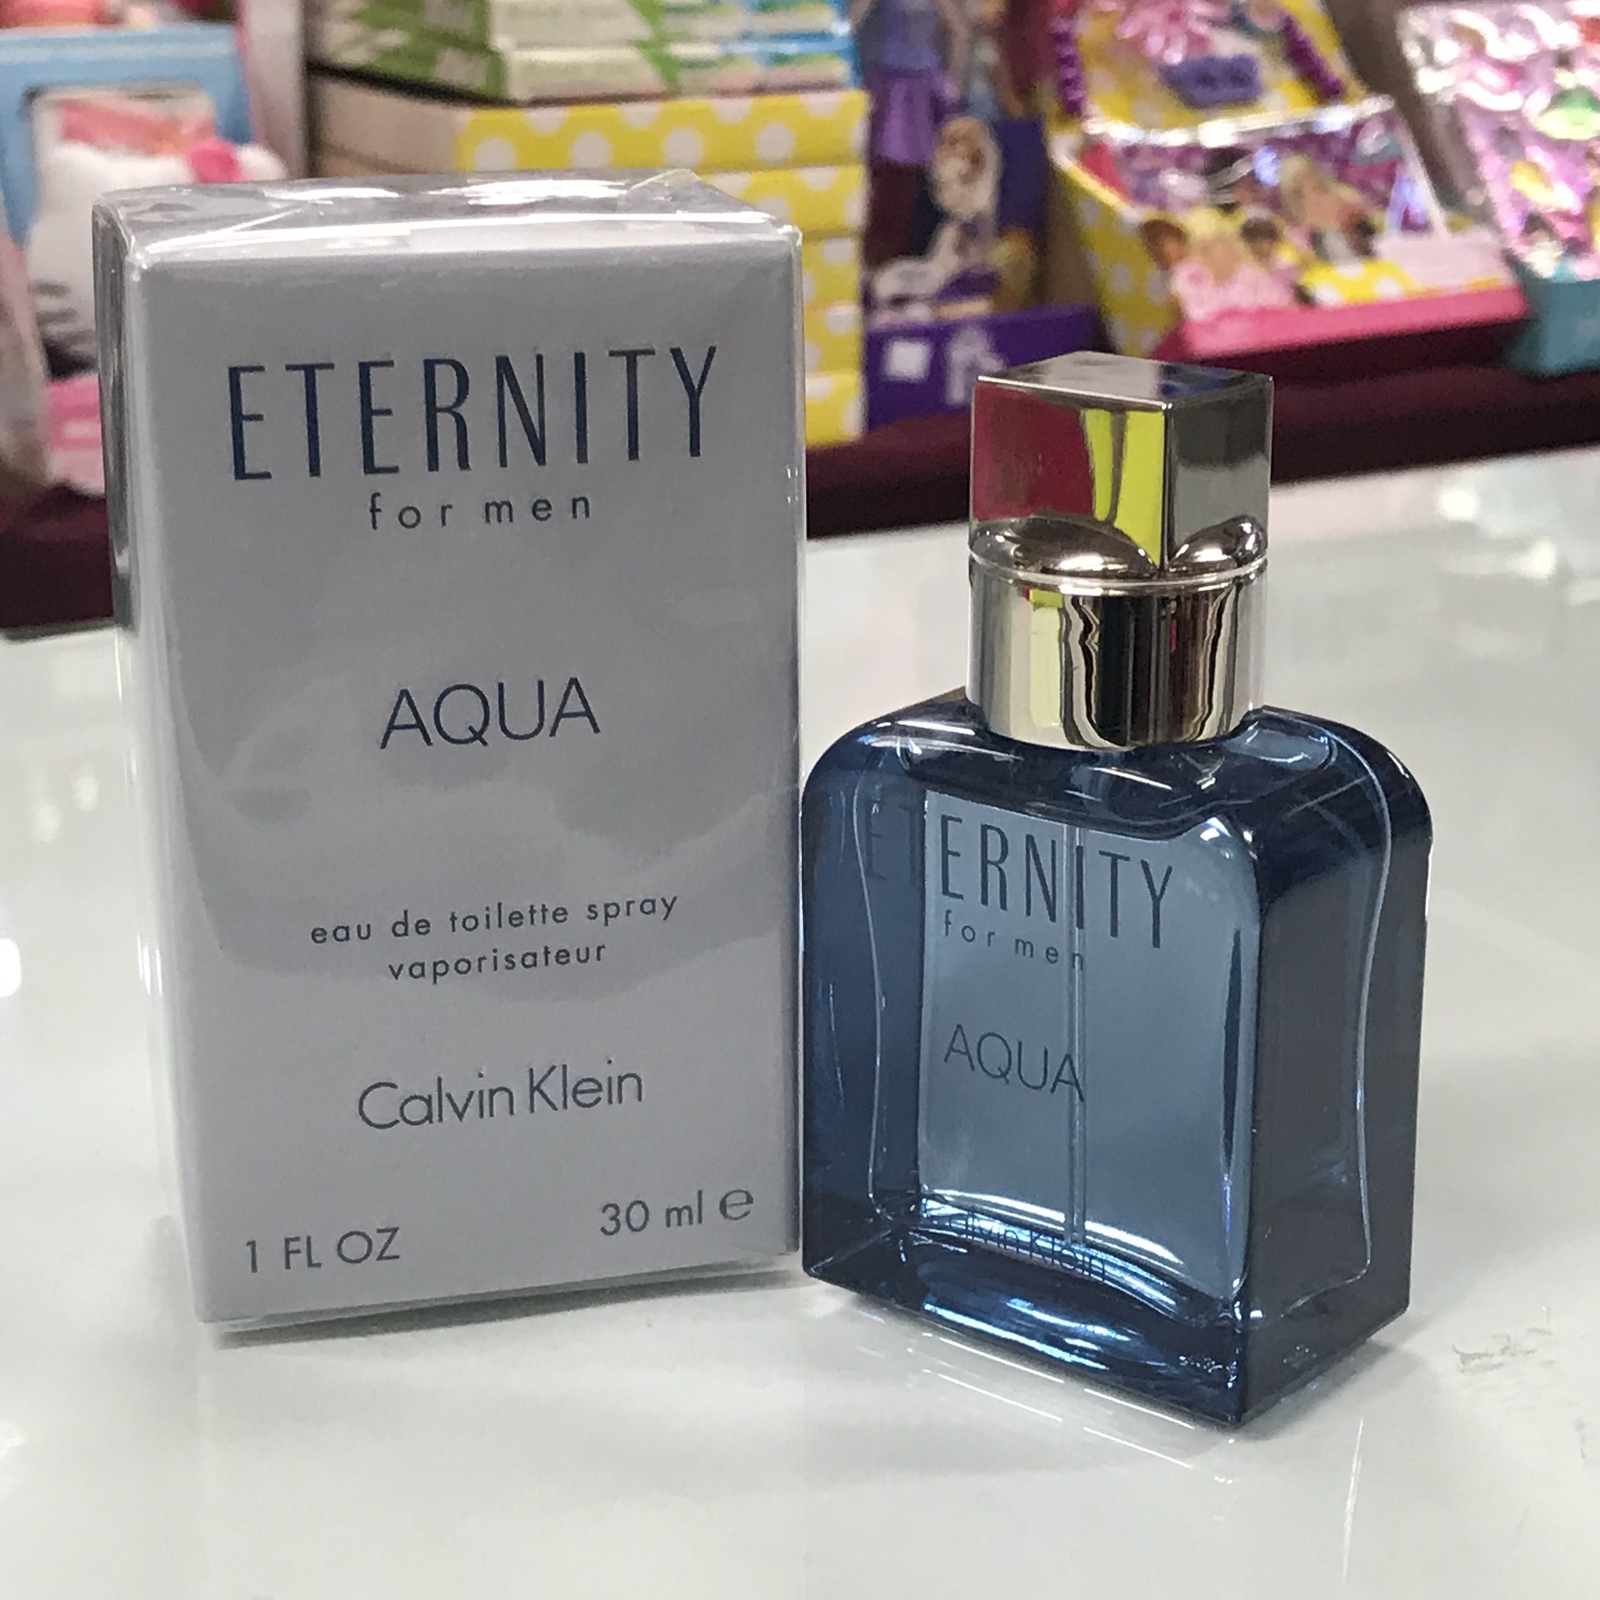 Eternity Aqua Calvin Klein for Men, 1.0 fl.oz / 30 ml eau de toilette spray - $27.99